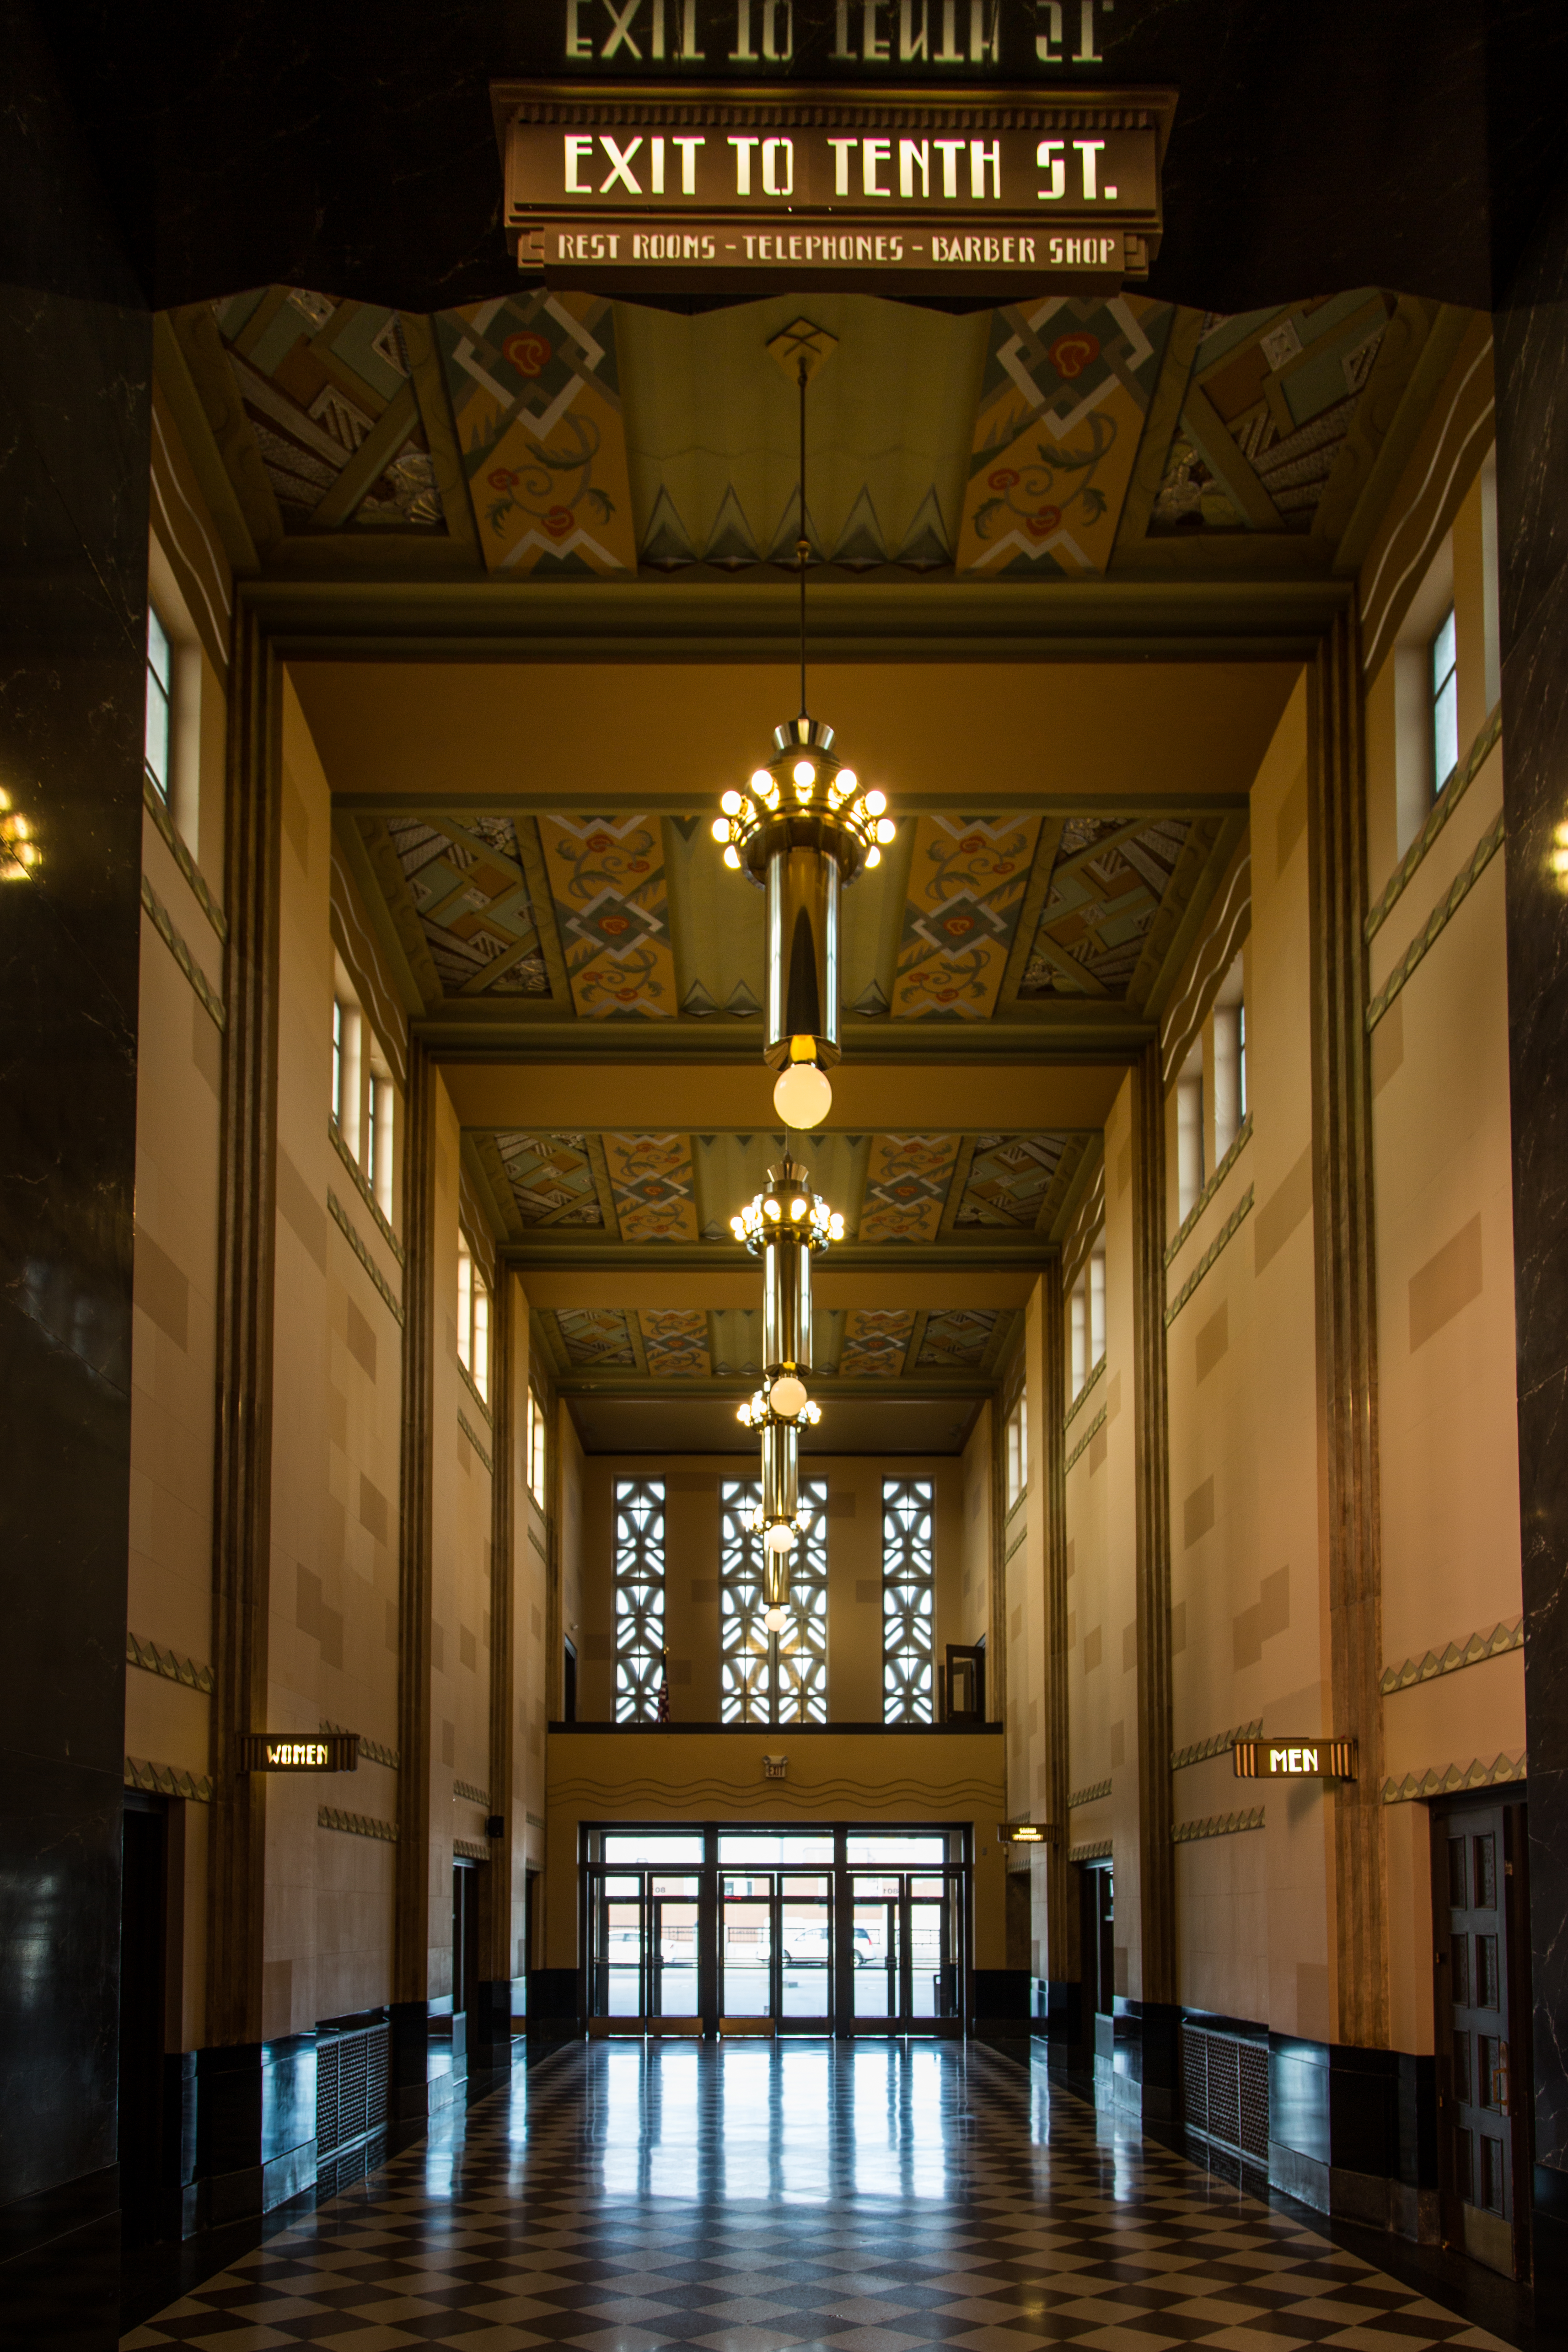 Union Station Great Hall